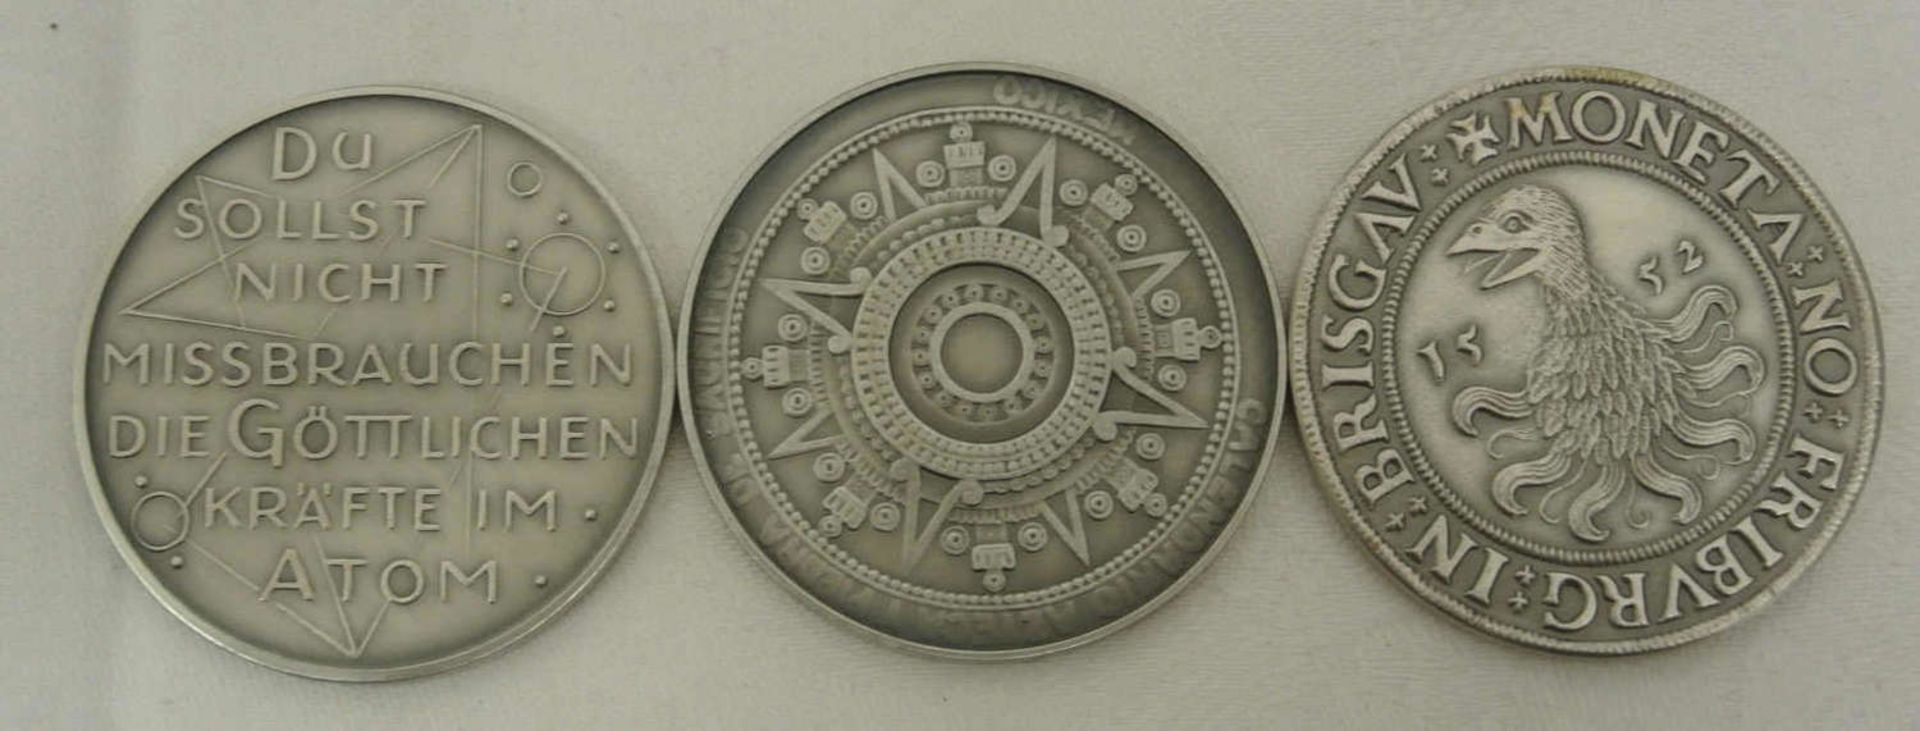 3 große Silbermedaillen, 835er Silber, verschiedene Themen. Gewicht ca. 75,2 gr. 3 large silver